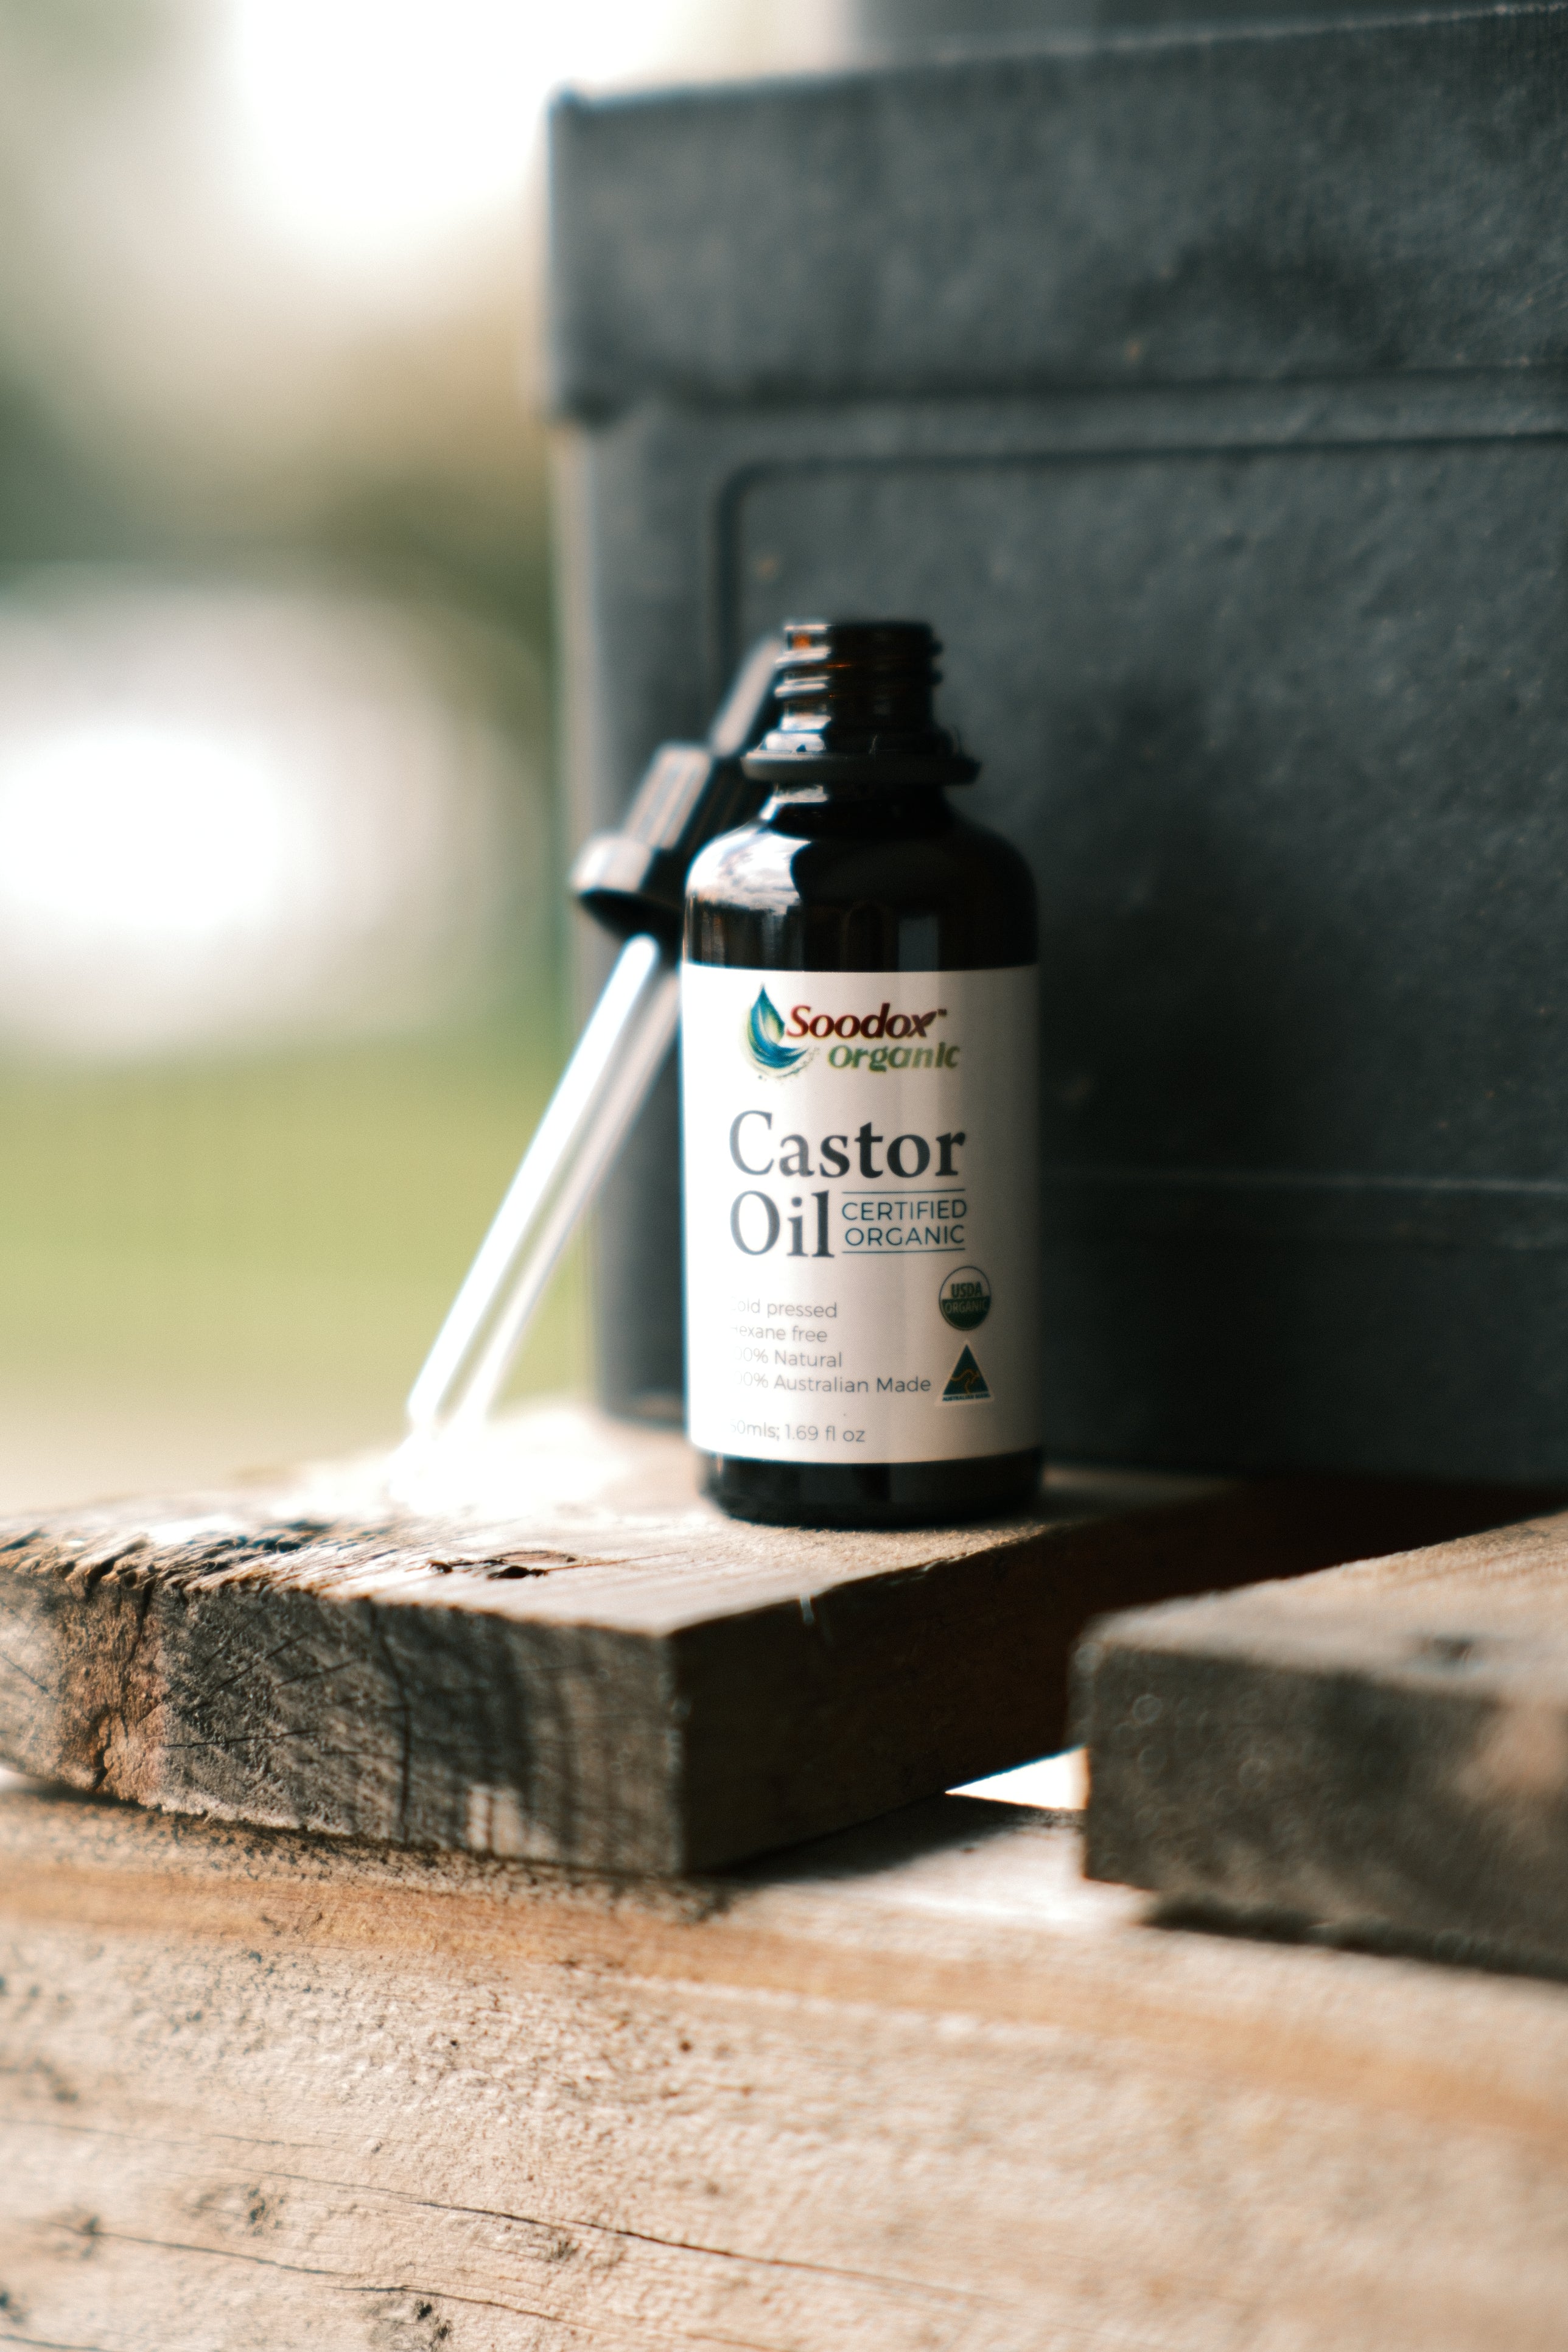 Soodox Organic Castor Oil 50mL